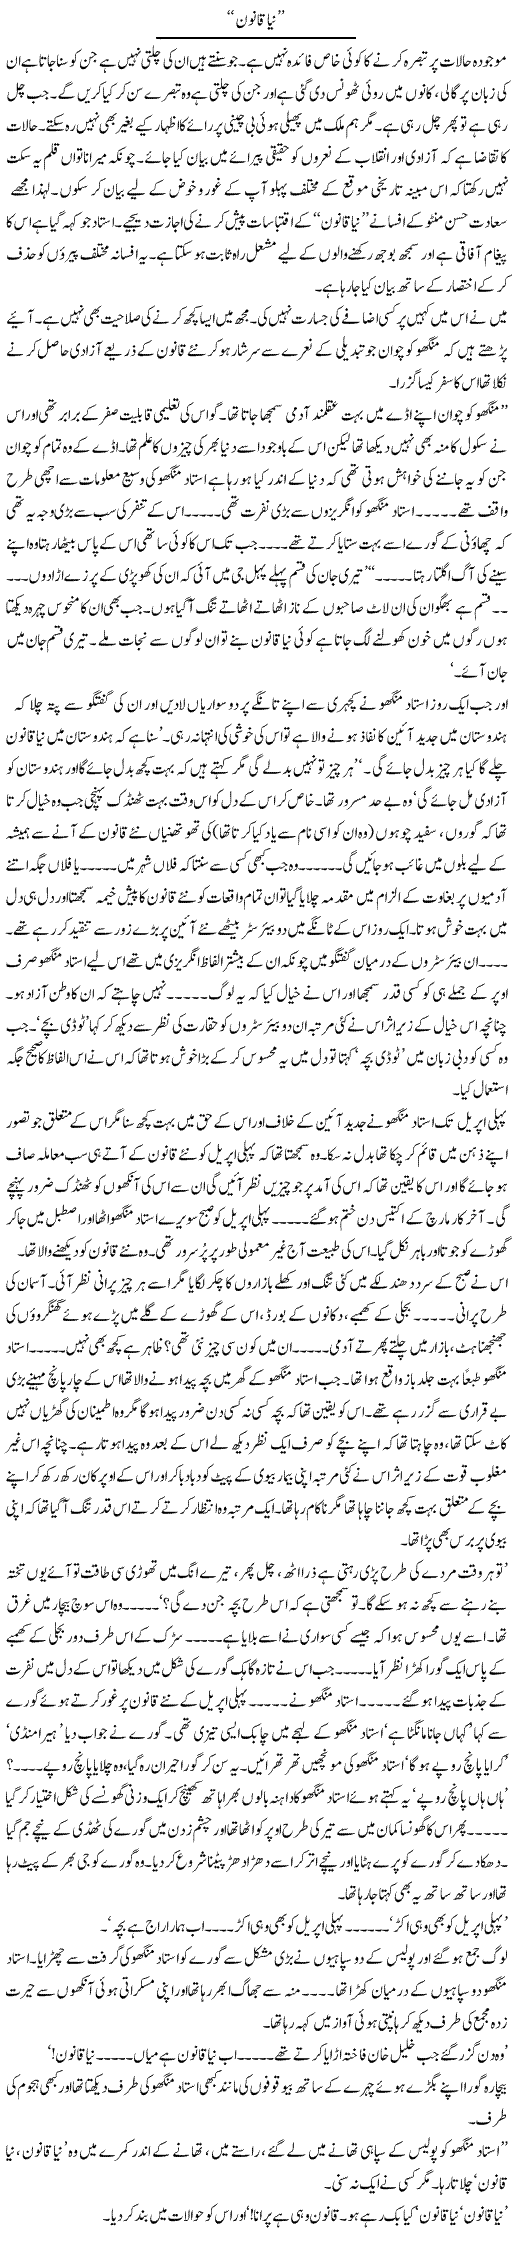 Naya Qanoon | Talat Hussain | Daily Urdu Columns